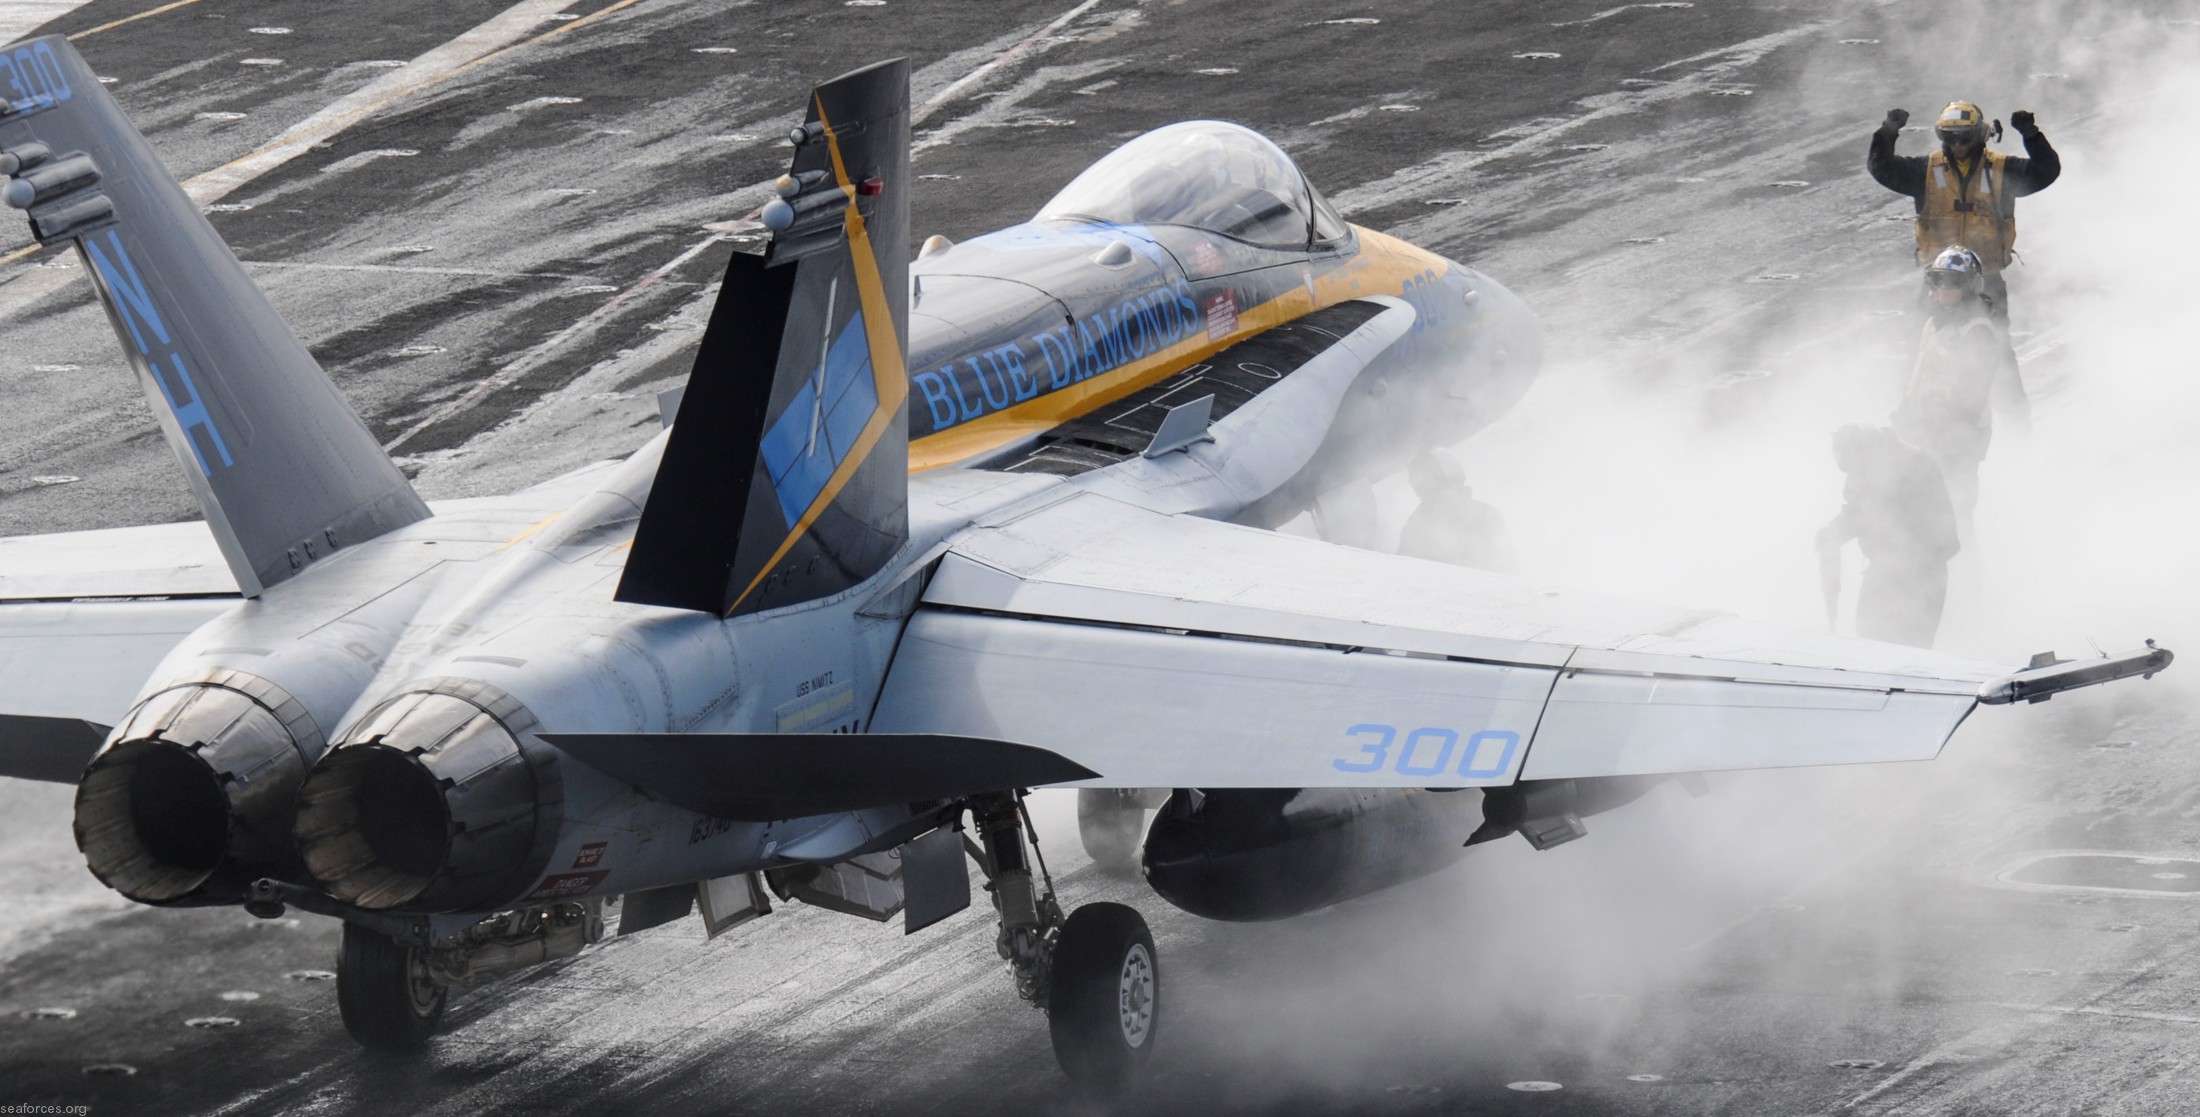 vfa-146 blue diamonds strike fighter squadron f/a-18c hornet carrier air wing cvw-11 uss nimitz cvn-68 26